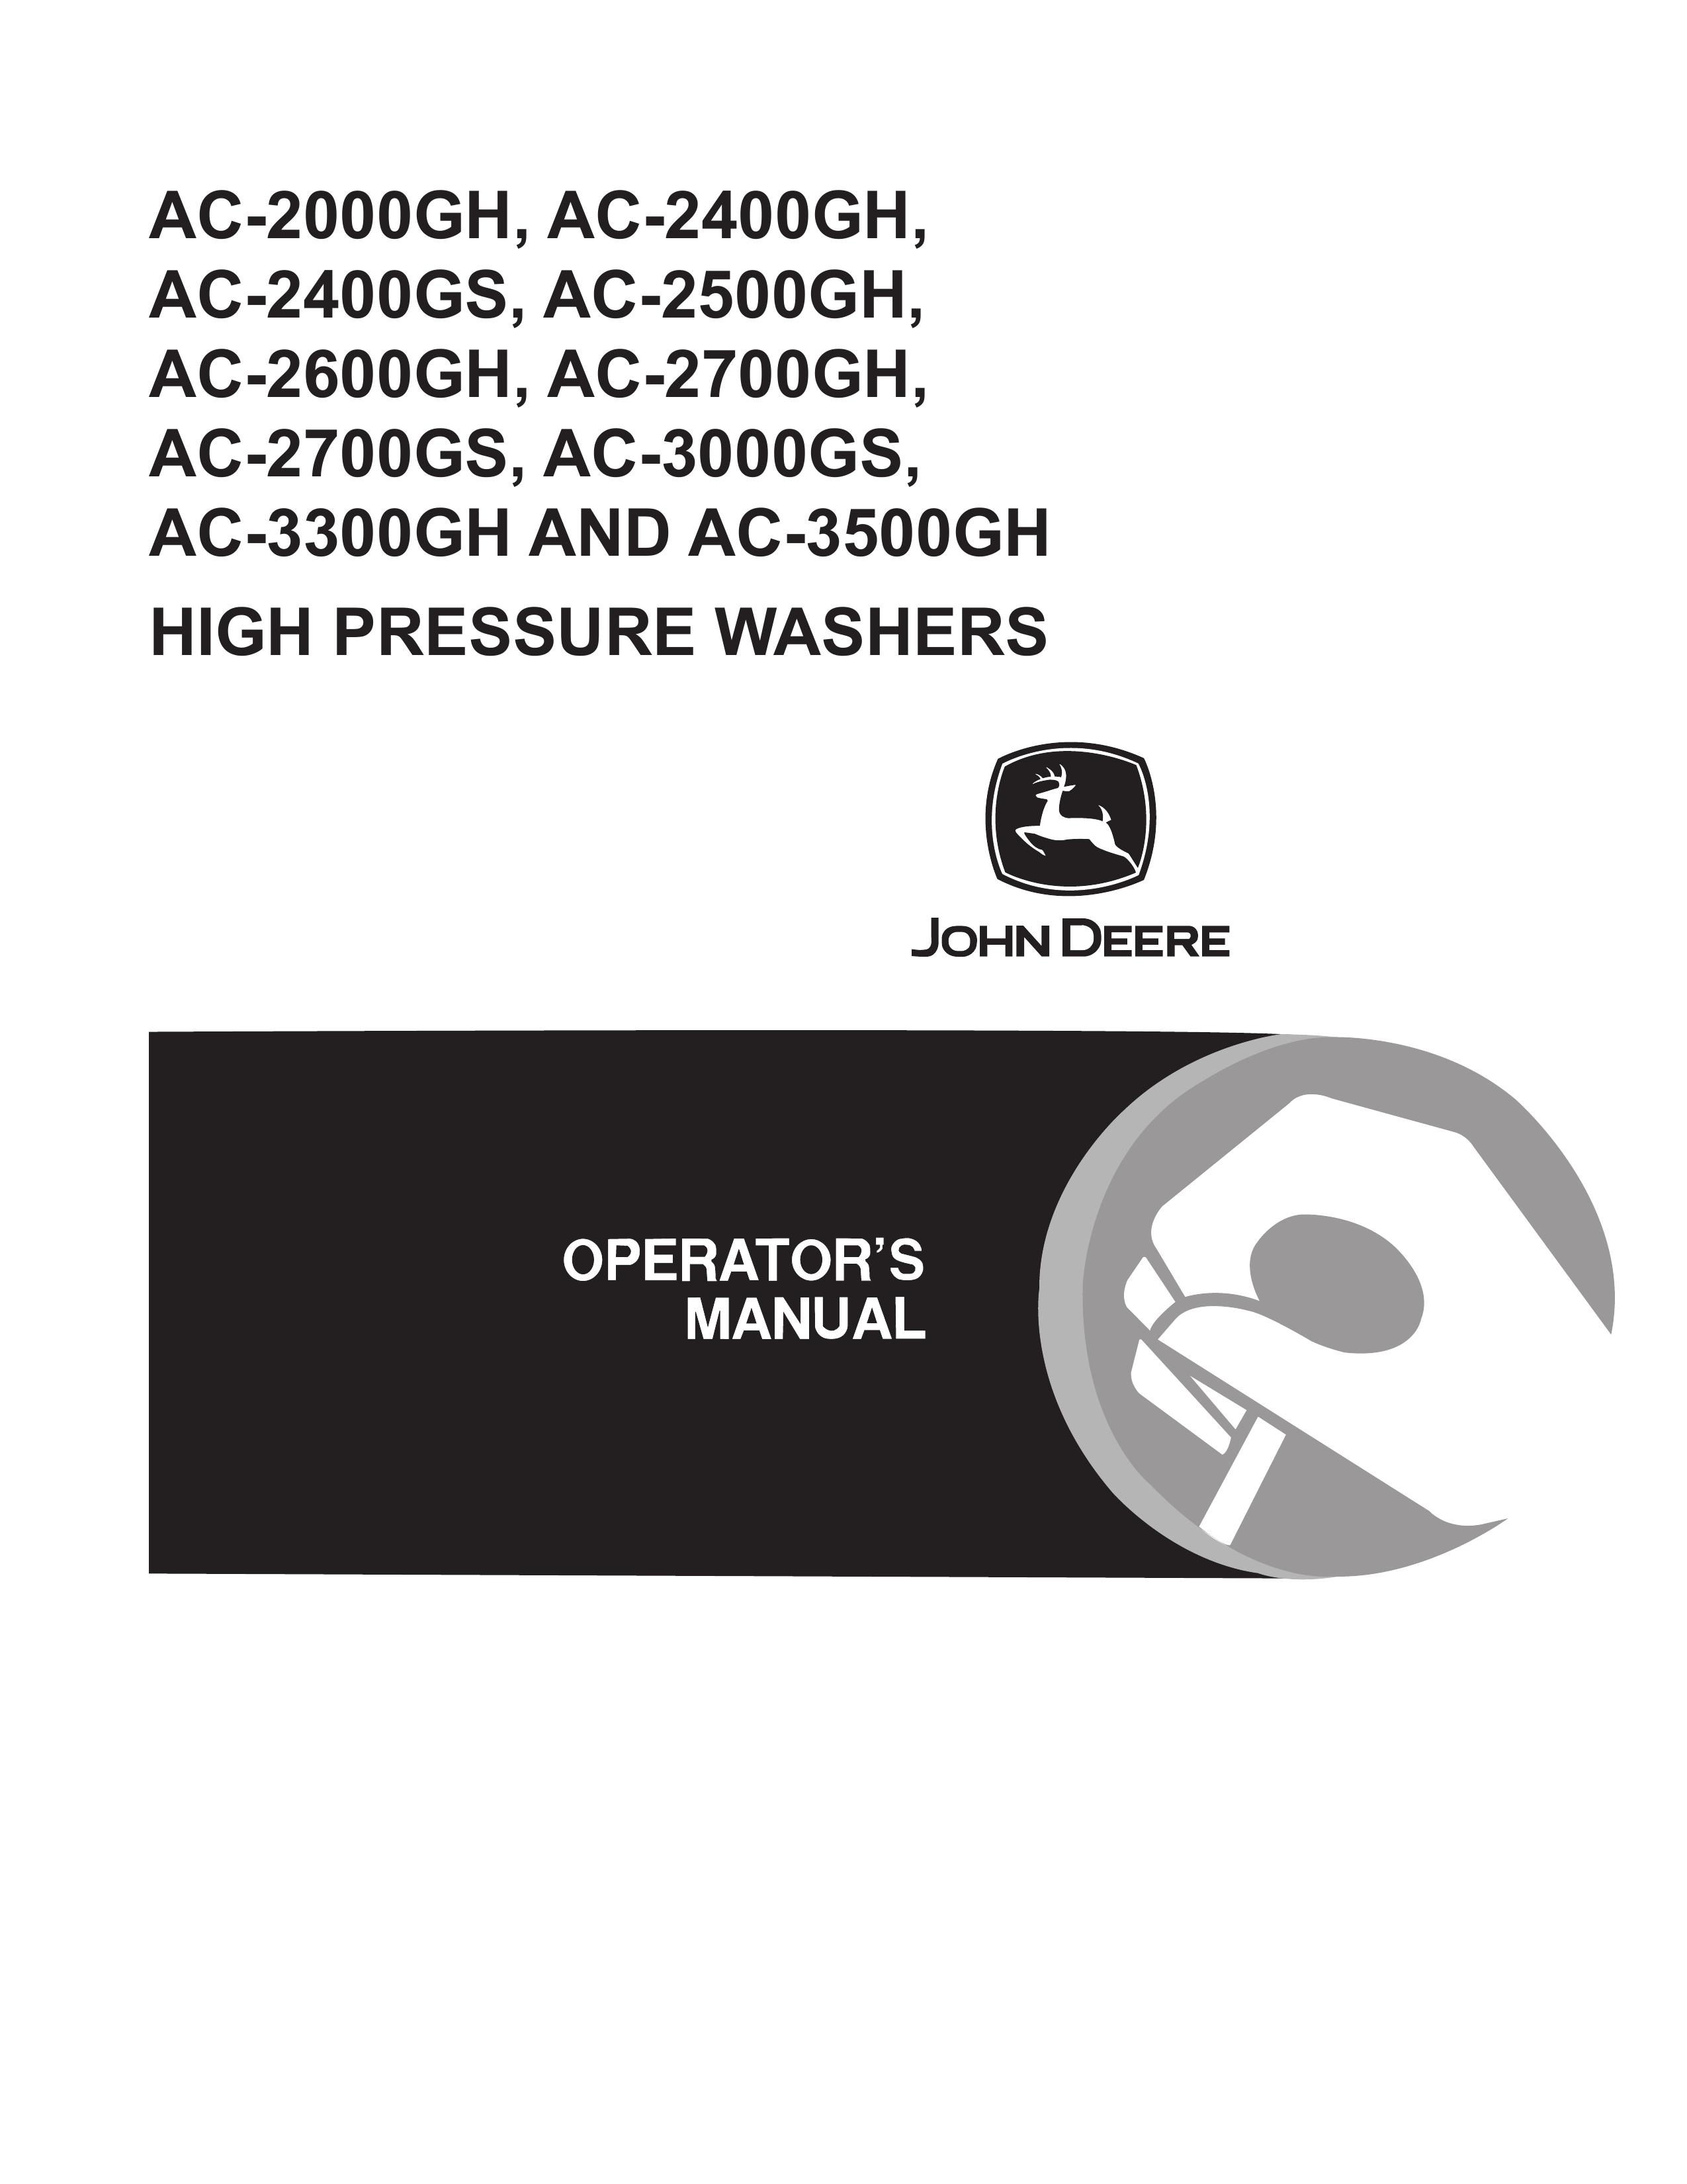 John Deere AC-3300GH Washer User Manual